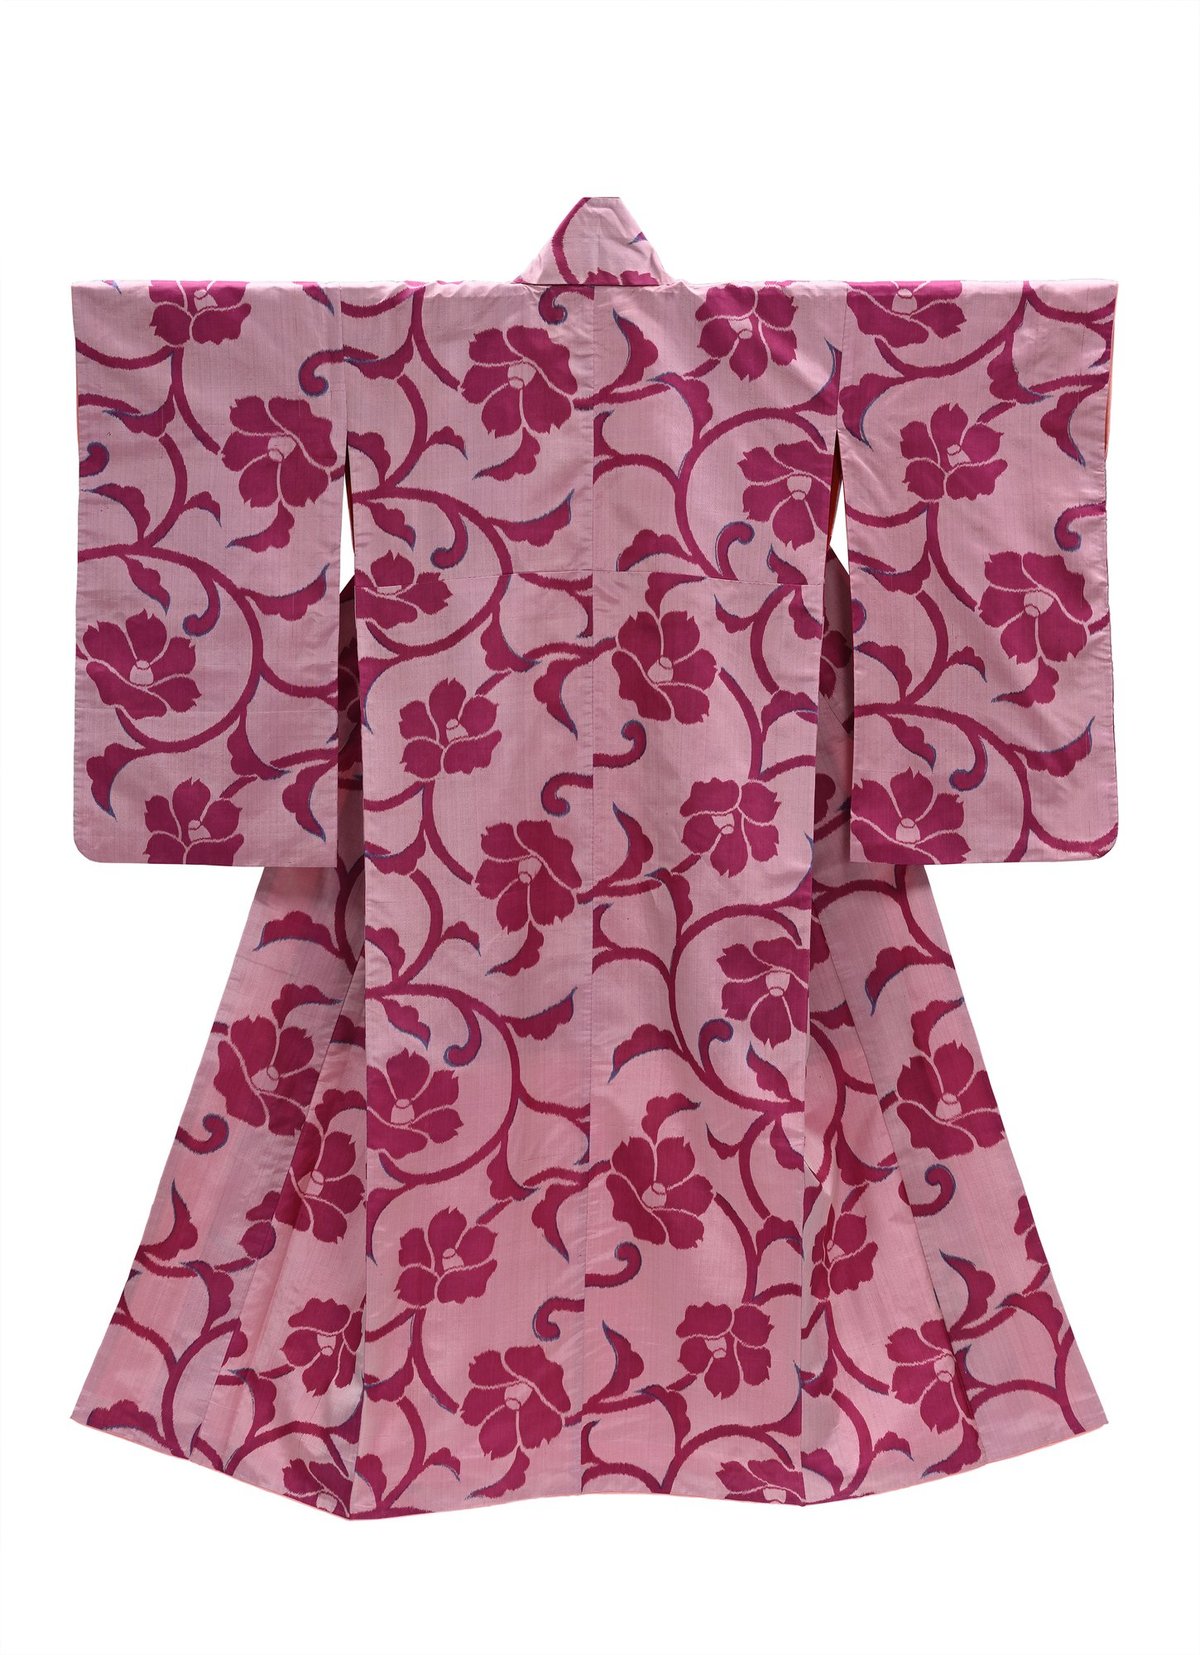 Jaapani kimono.